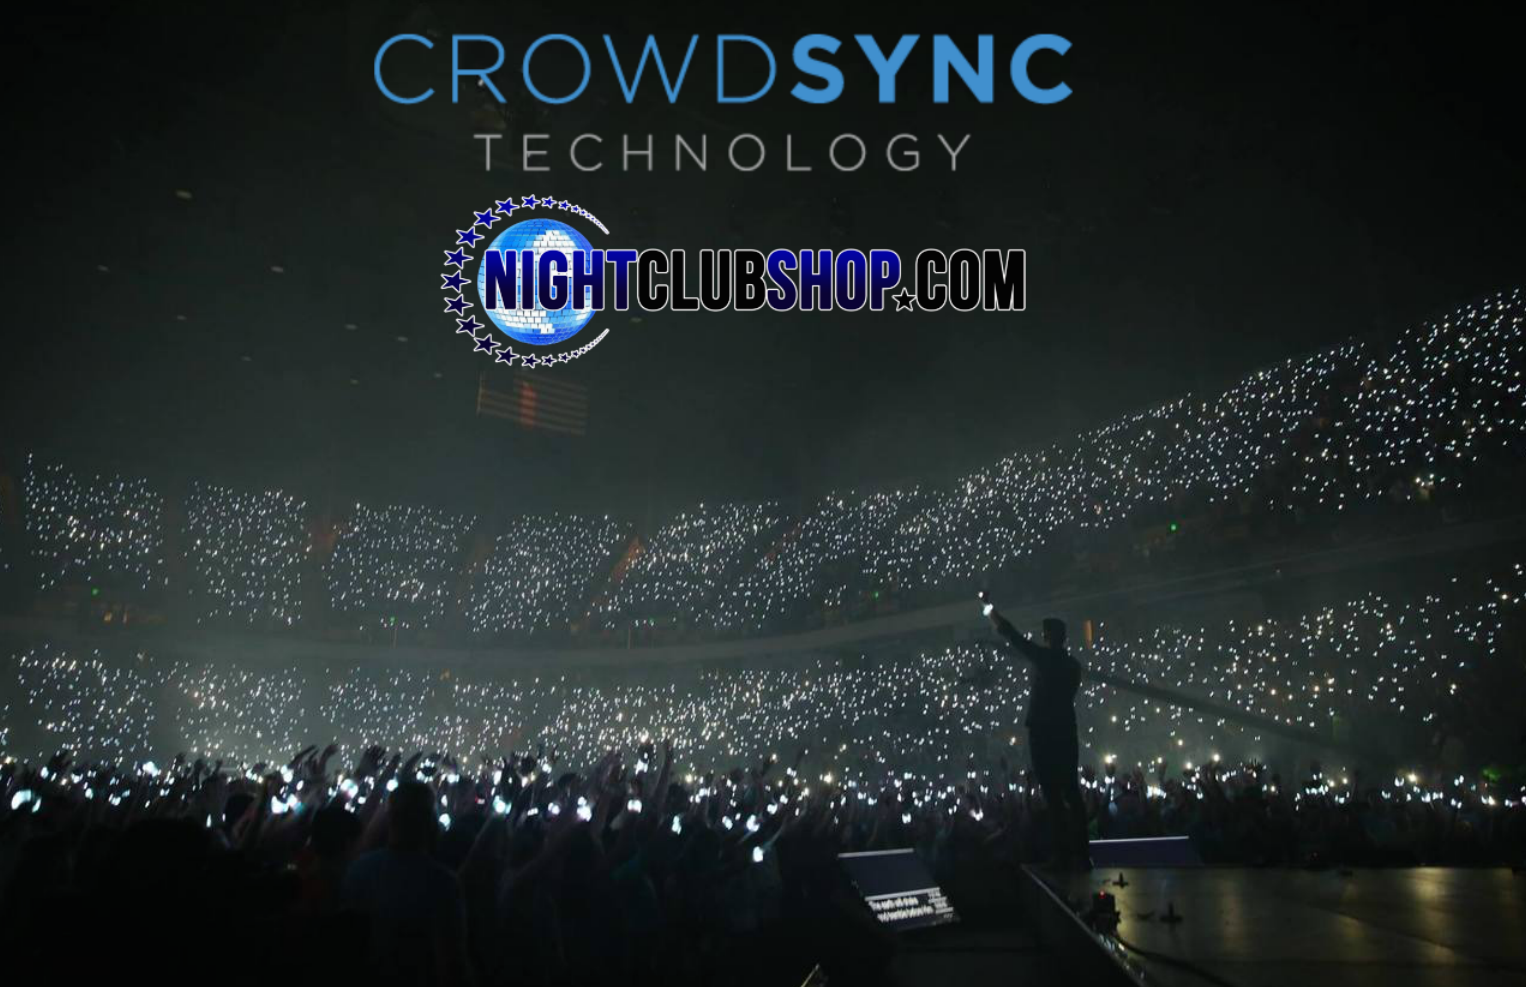 nightclubshop-rf-led-wristband-crowdsync-technology.png